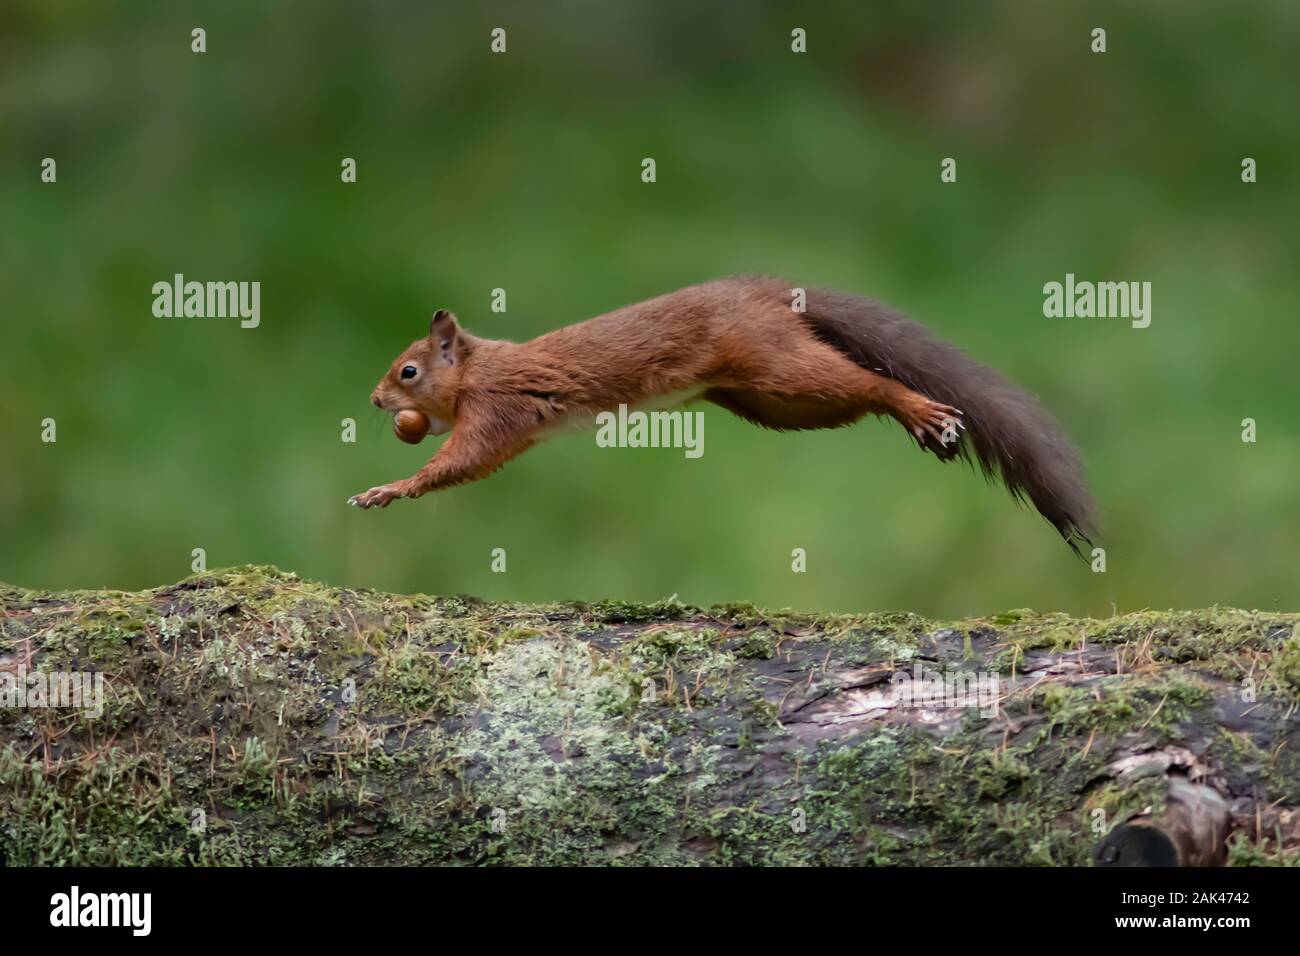 Red Squirrel (Sciurus vulgaris). Squirrel in mid leap running along fallen tree with food. Stock Photo